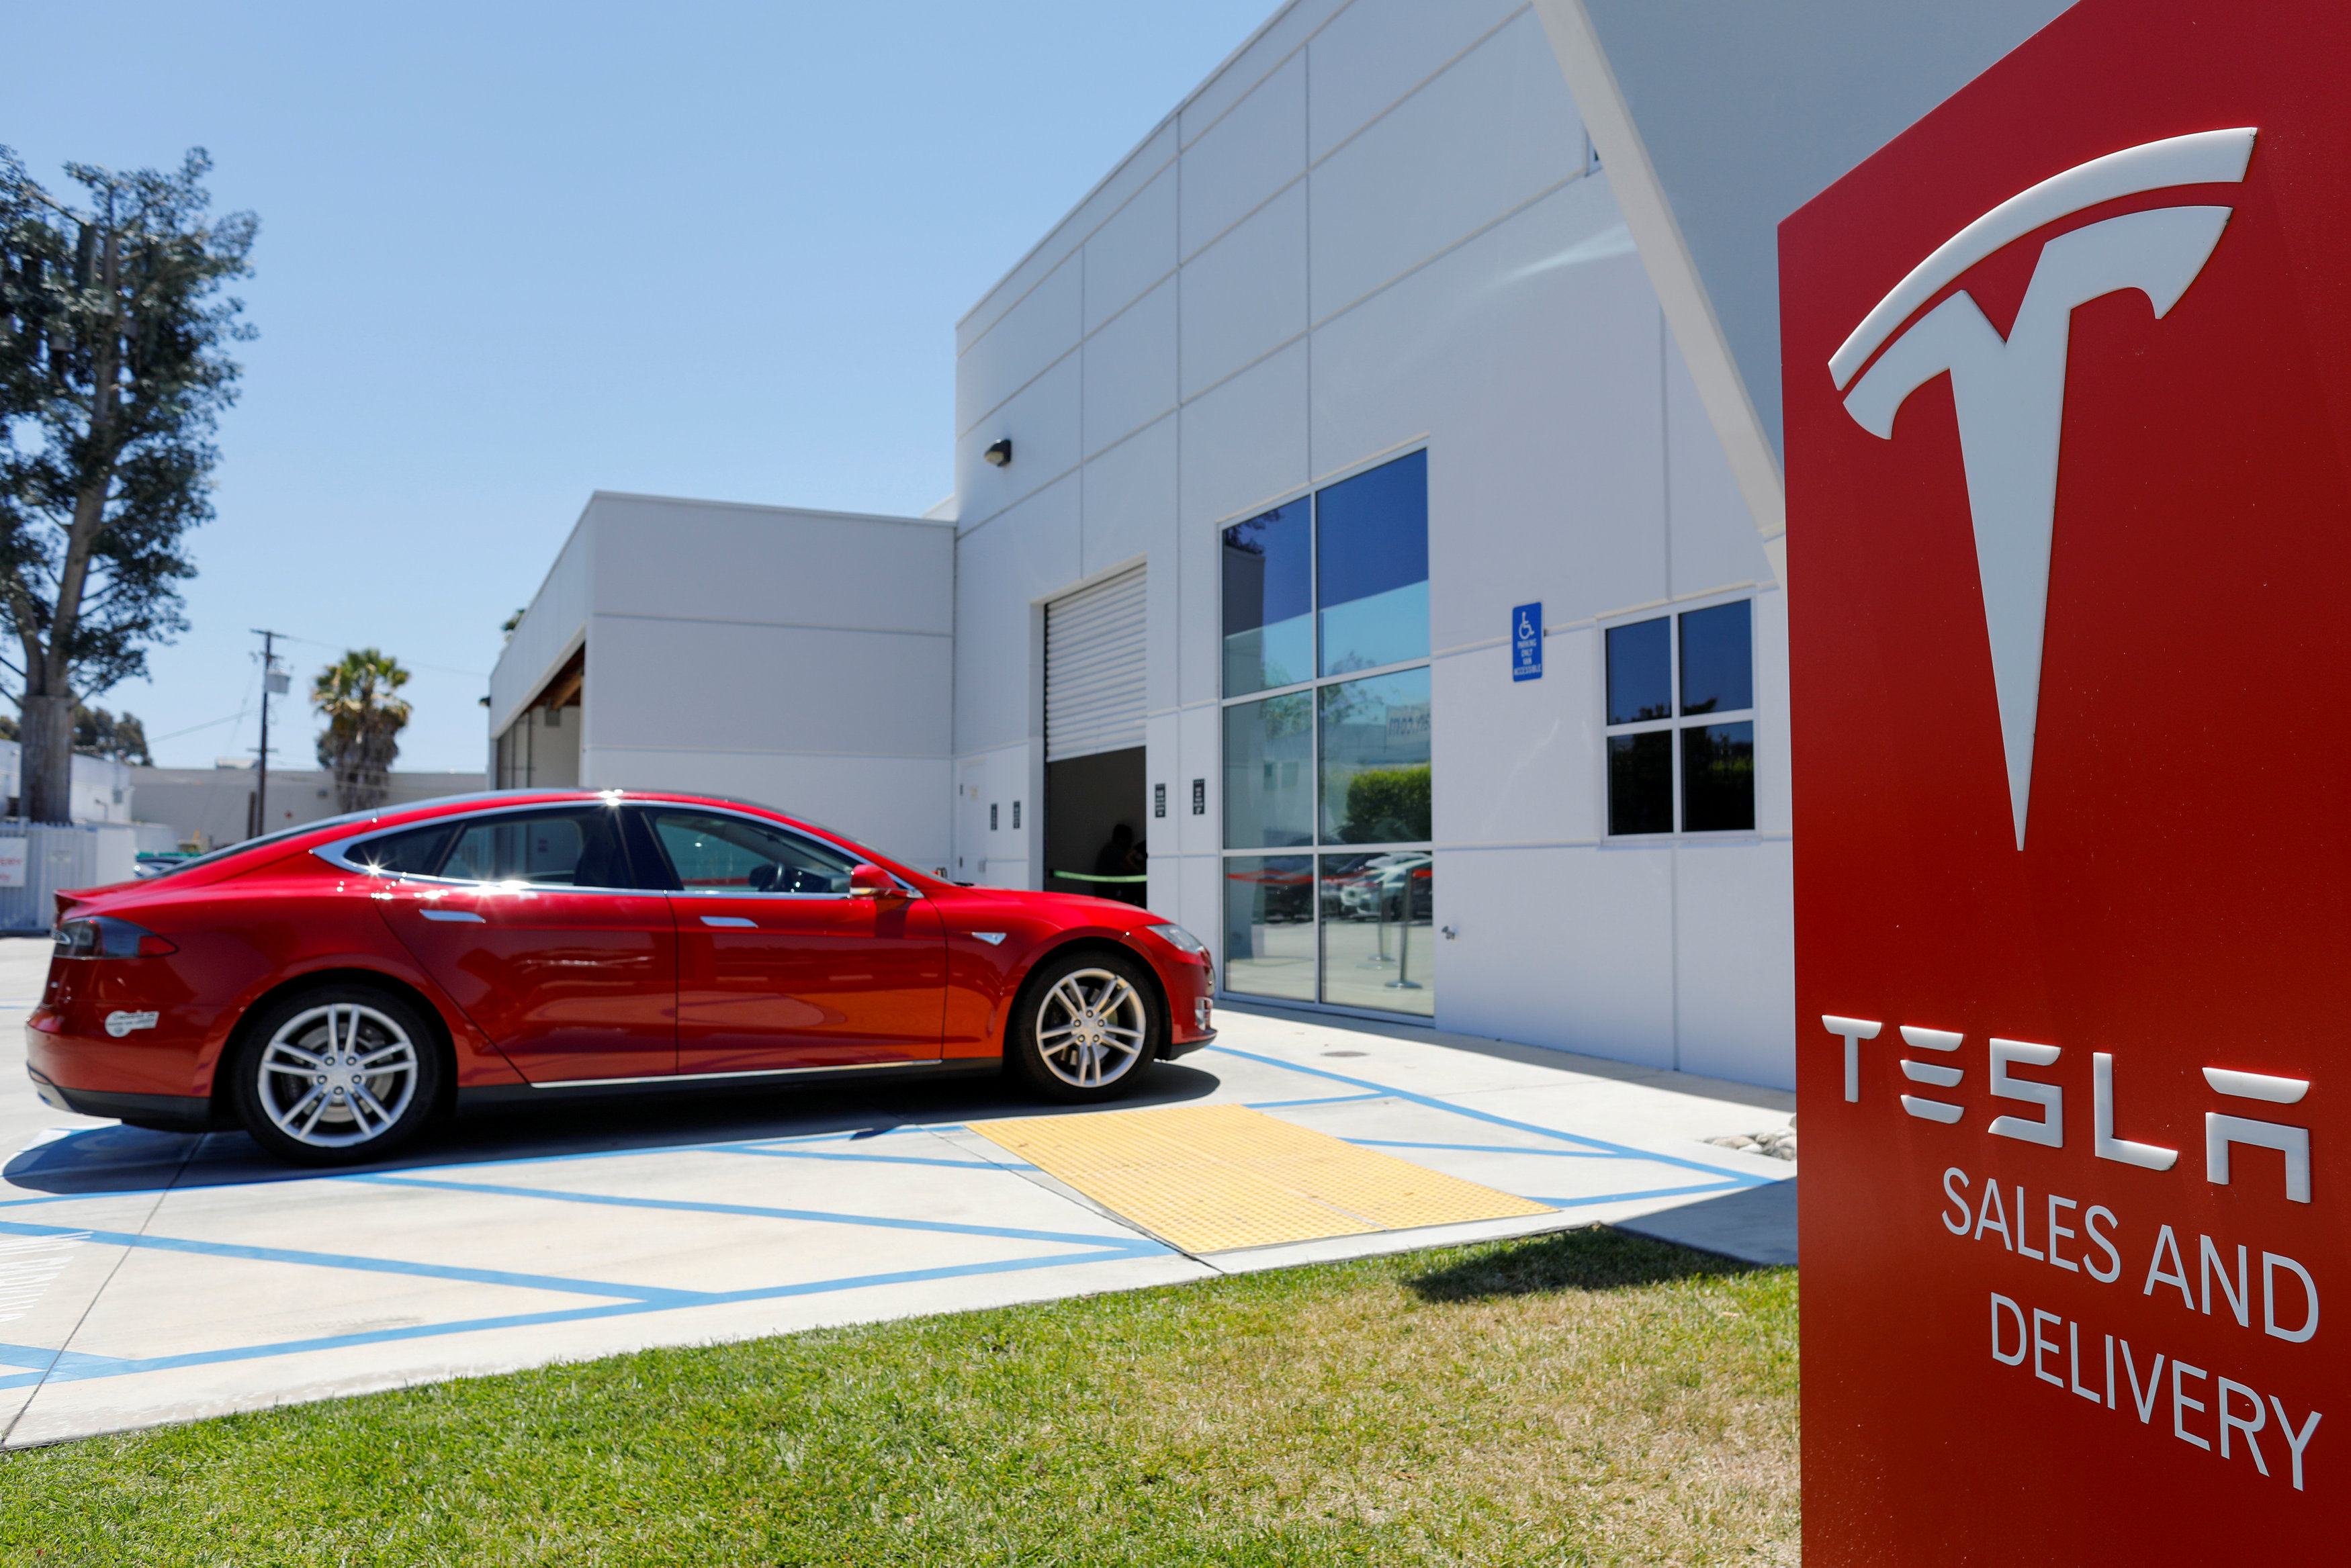 Tesla's slow disclosure raises governance, social media concerns